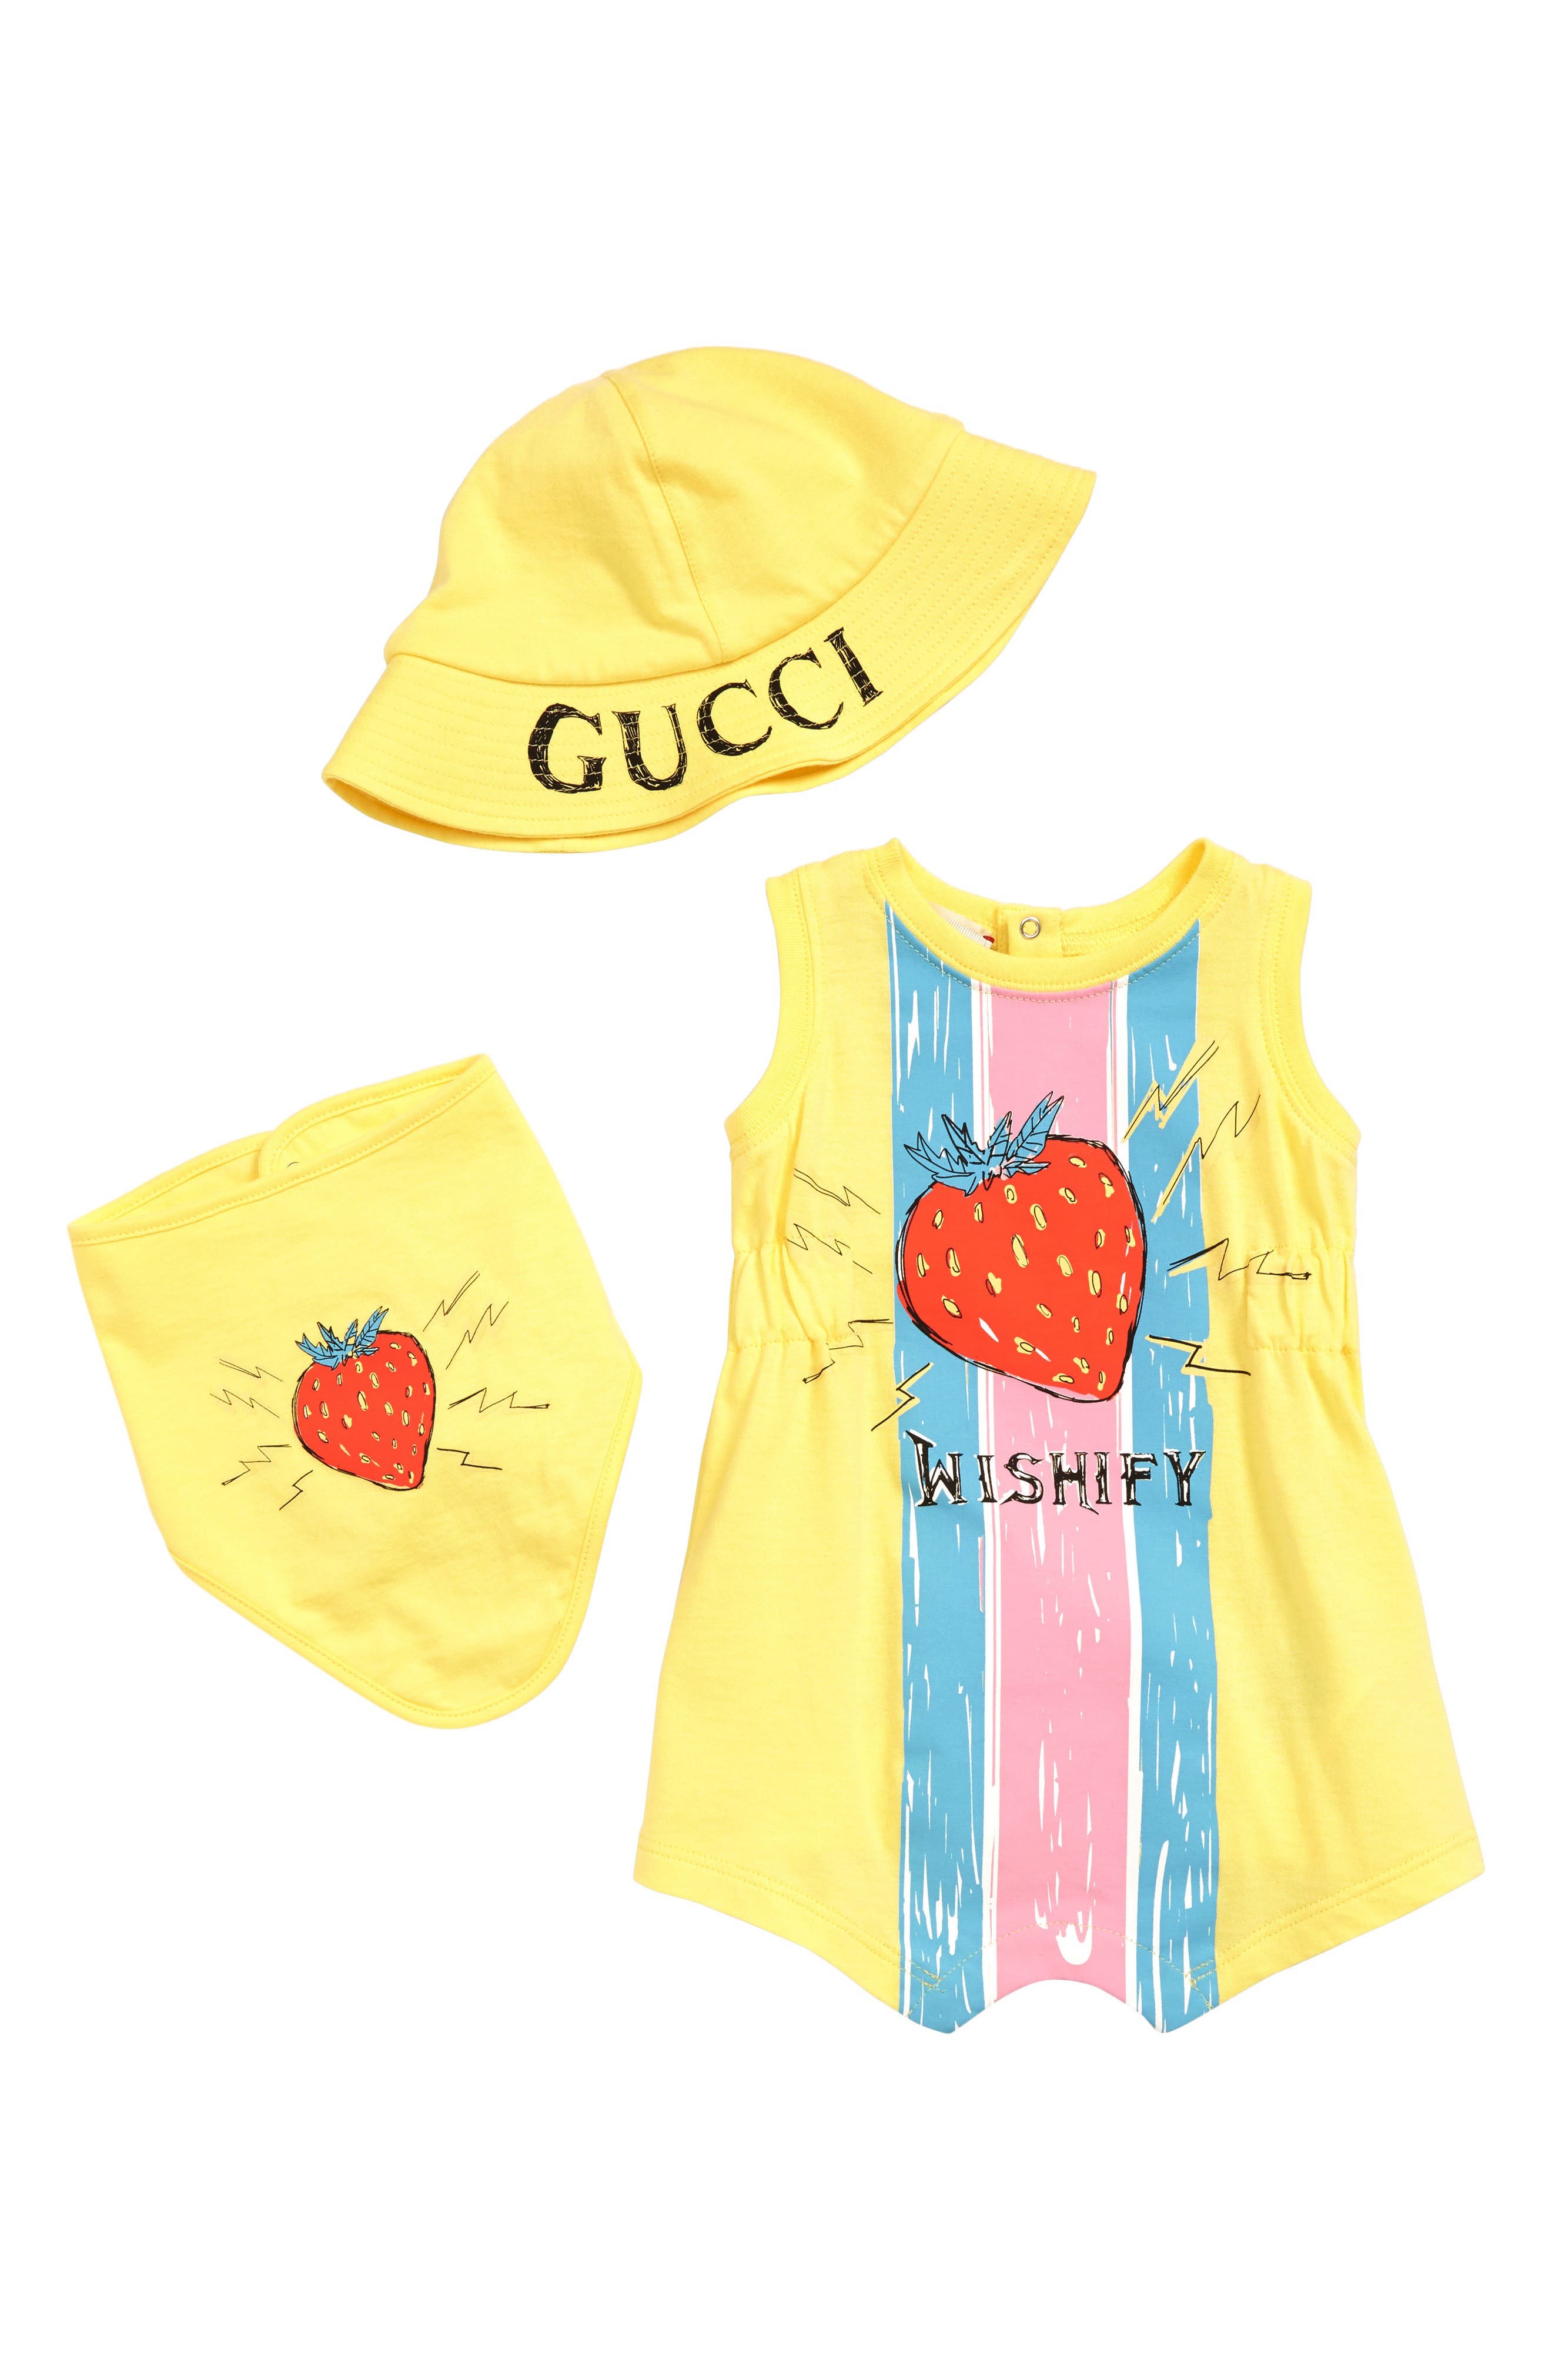 gucci baby wear